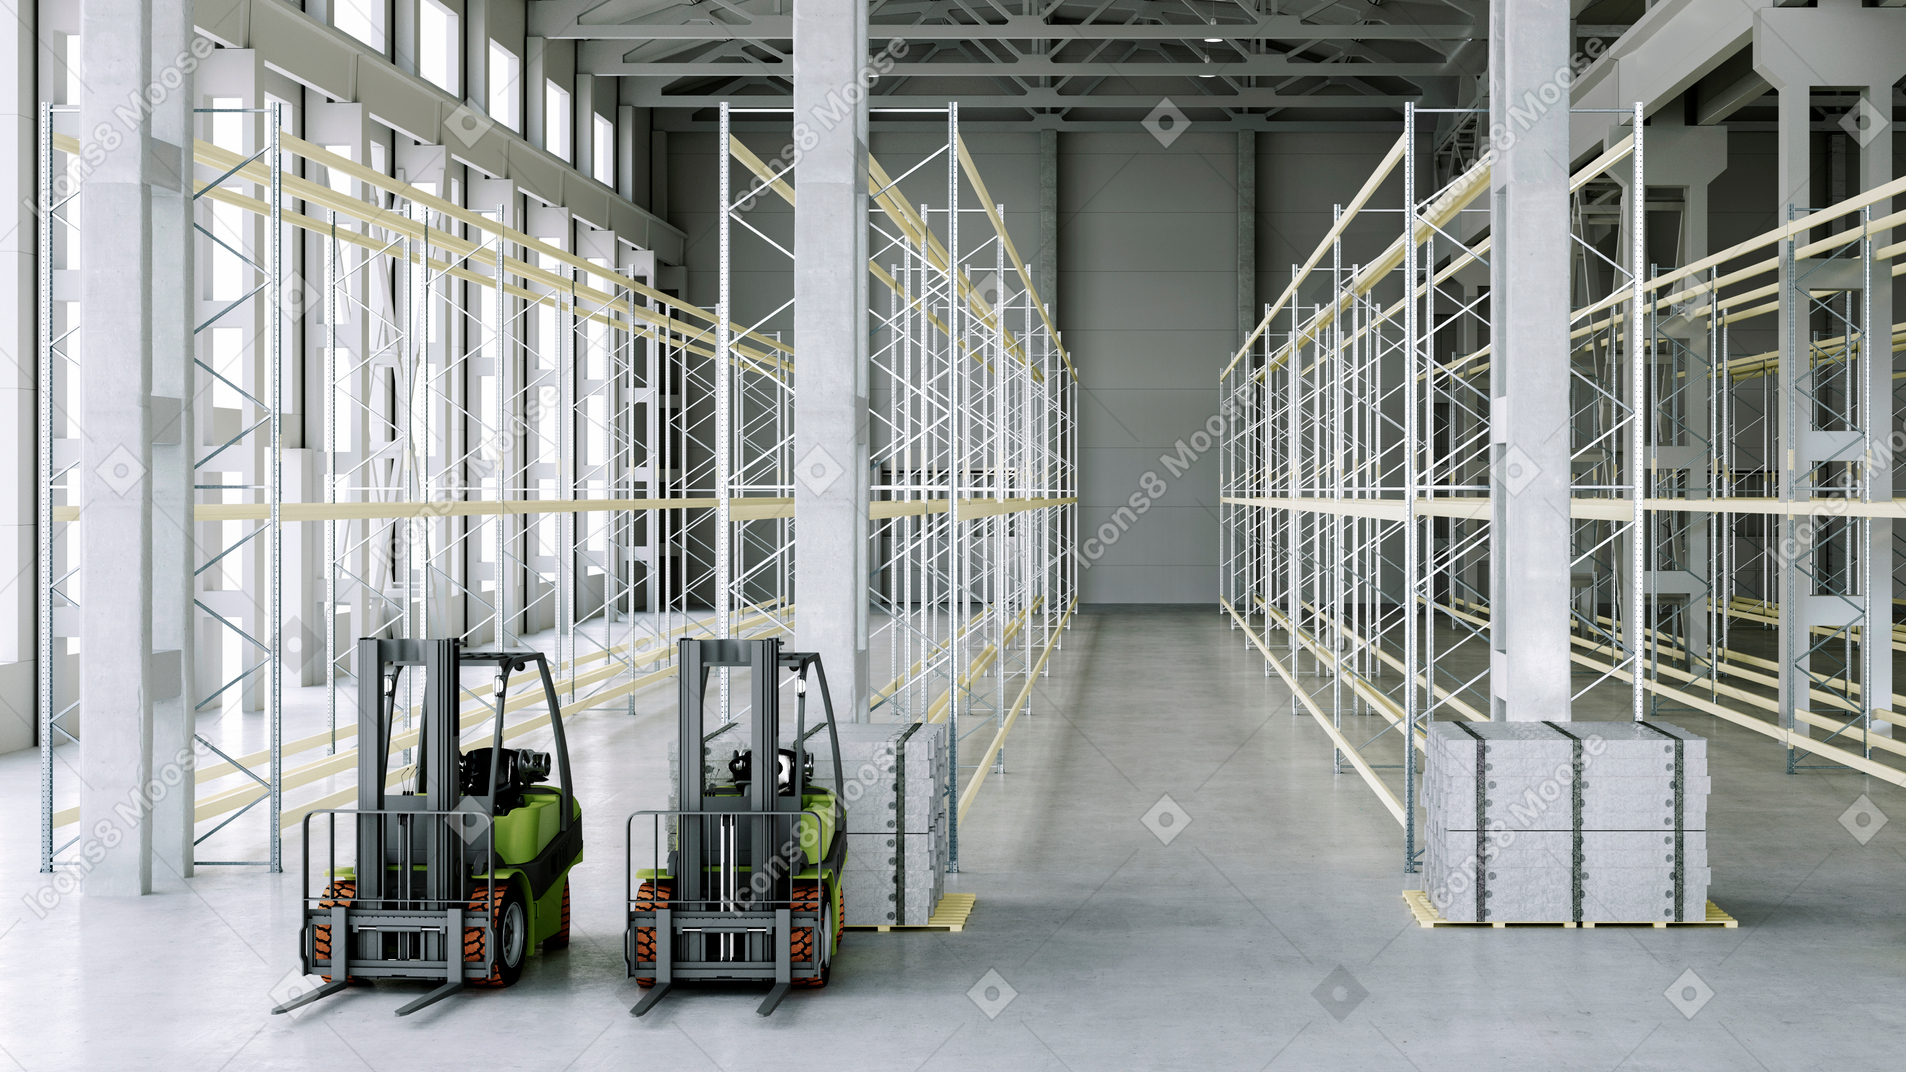 Forklift loaders at a spacious warehouse